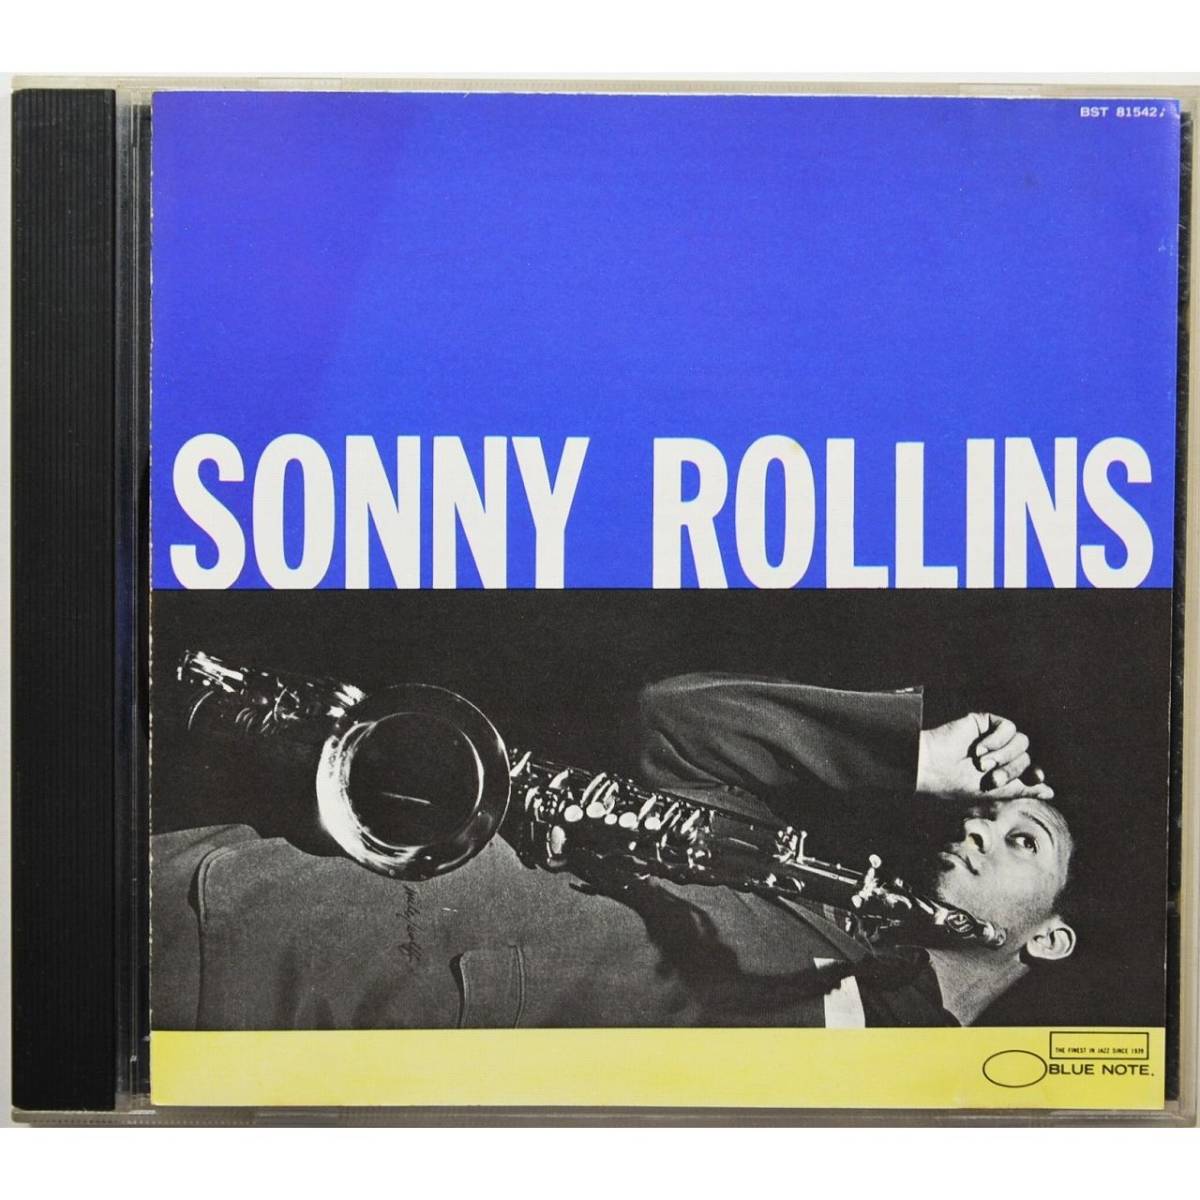 【BlueNote盤】Sonny Rollins / Sonny Rollins Volume One ◇ ソニー・ロリンズ / ソニー・ロリンズ Vol.1 ◇ドナルド・バード ◇_画像1